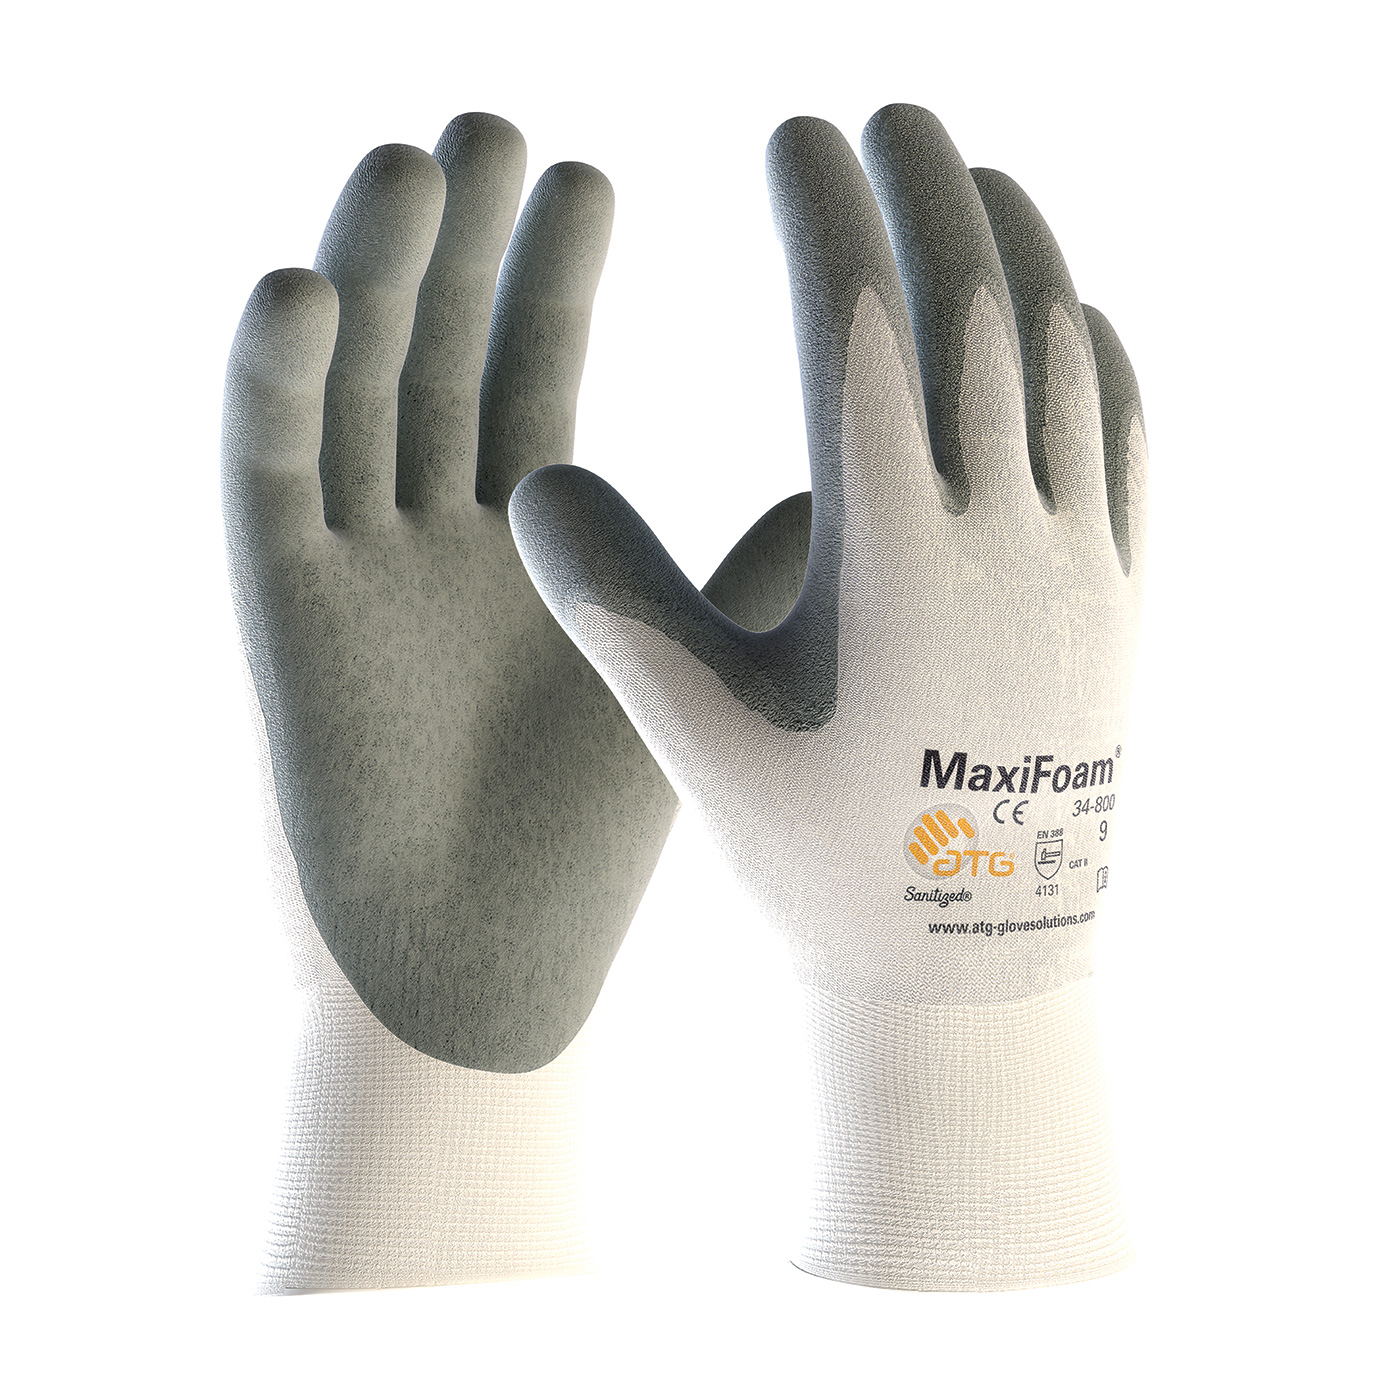 PIP 34-800/M MaxiFoam Premium Eeamless Knit Nylon Glove with Nitrile Coated Foam Grip on Palm & Fingers - Medium PID-34 800 M